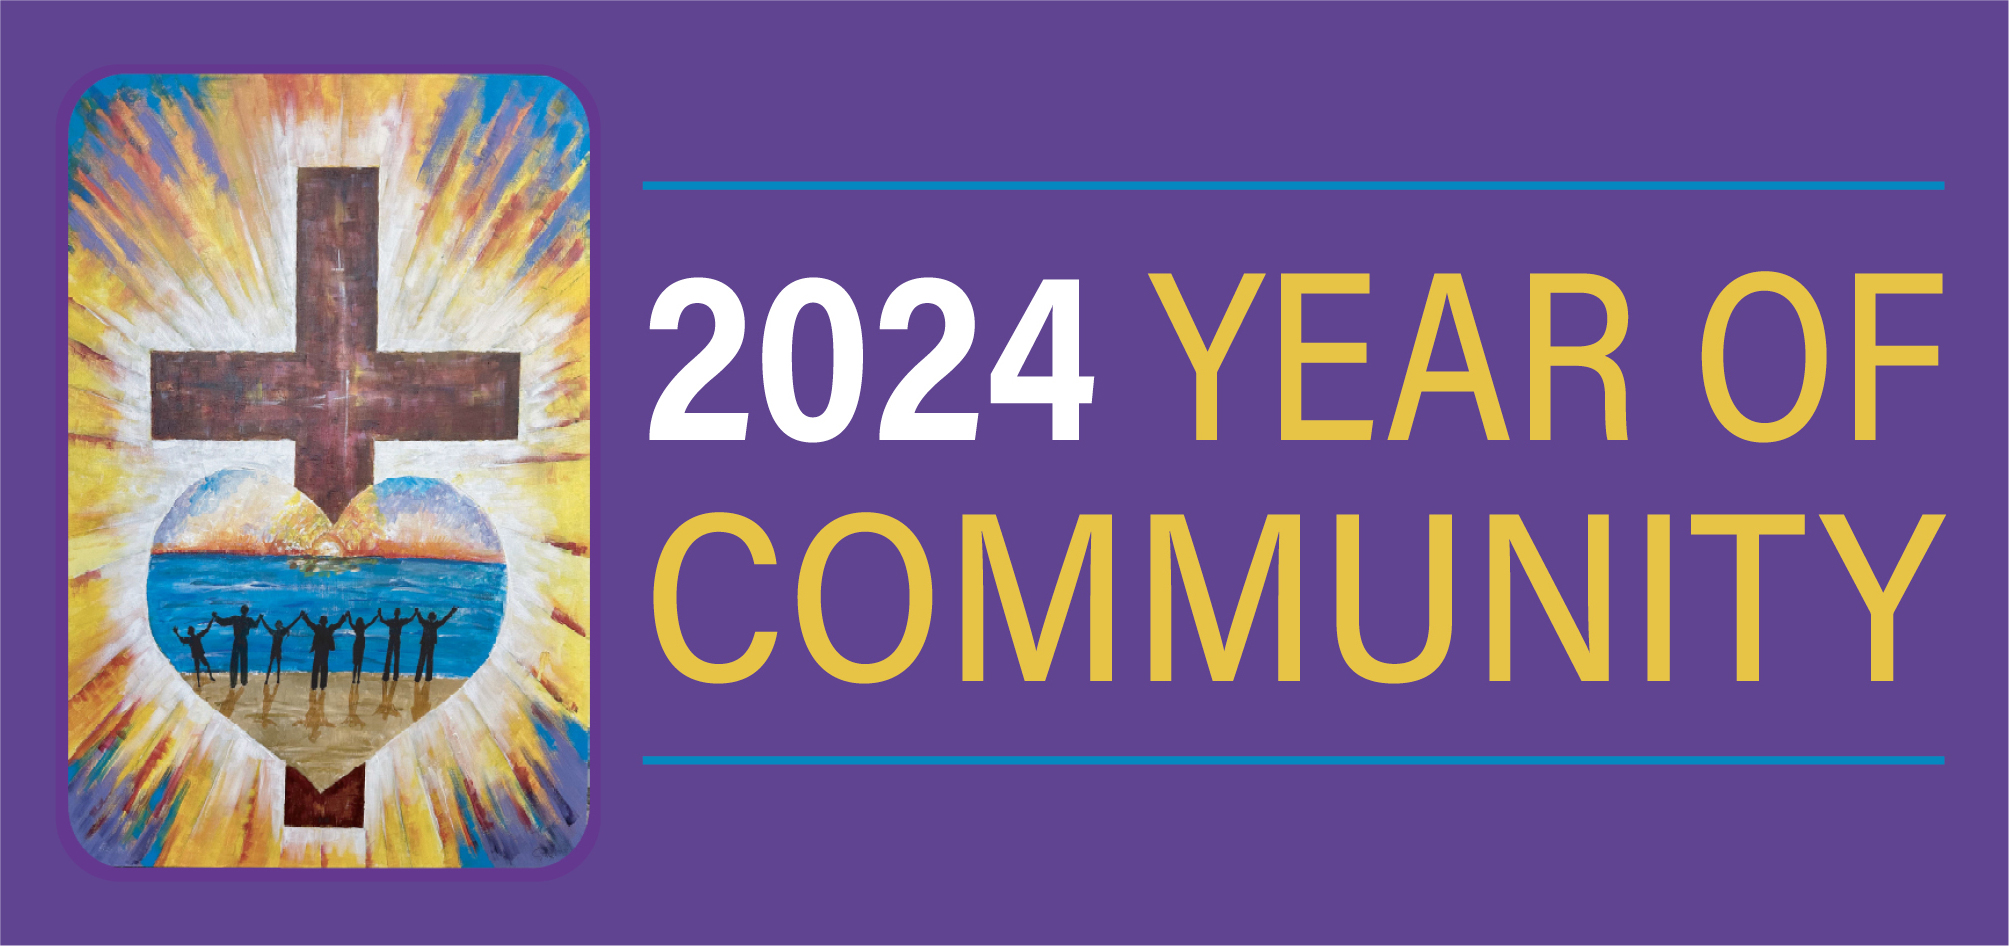 PITTWATER Parish 24 Year of Community Logo